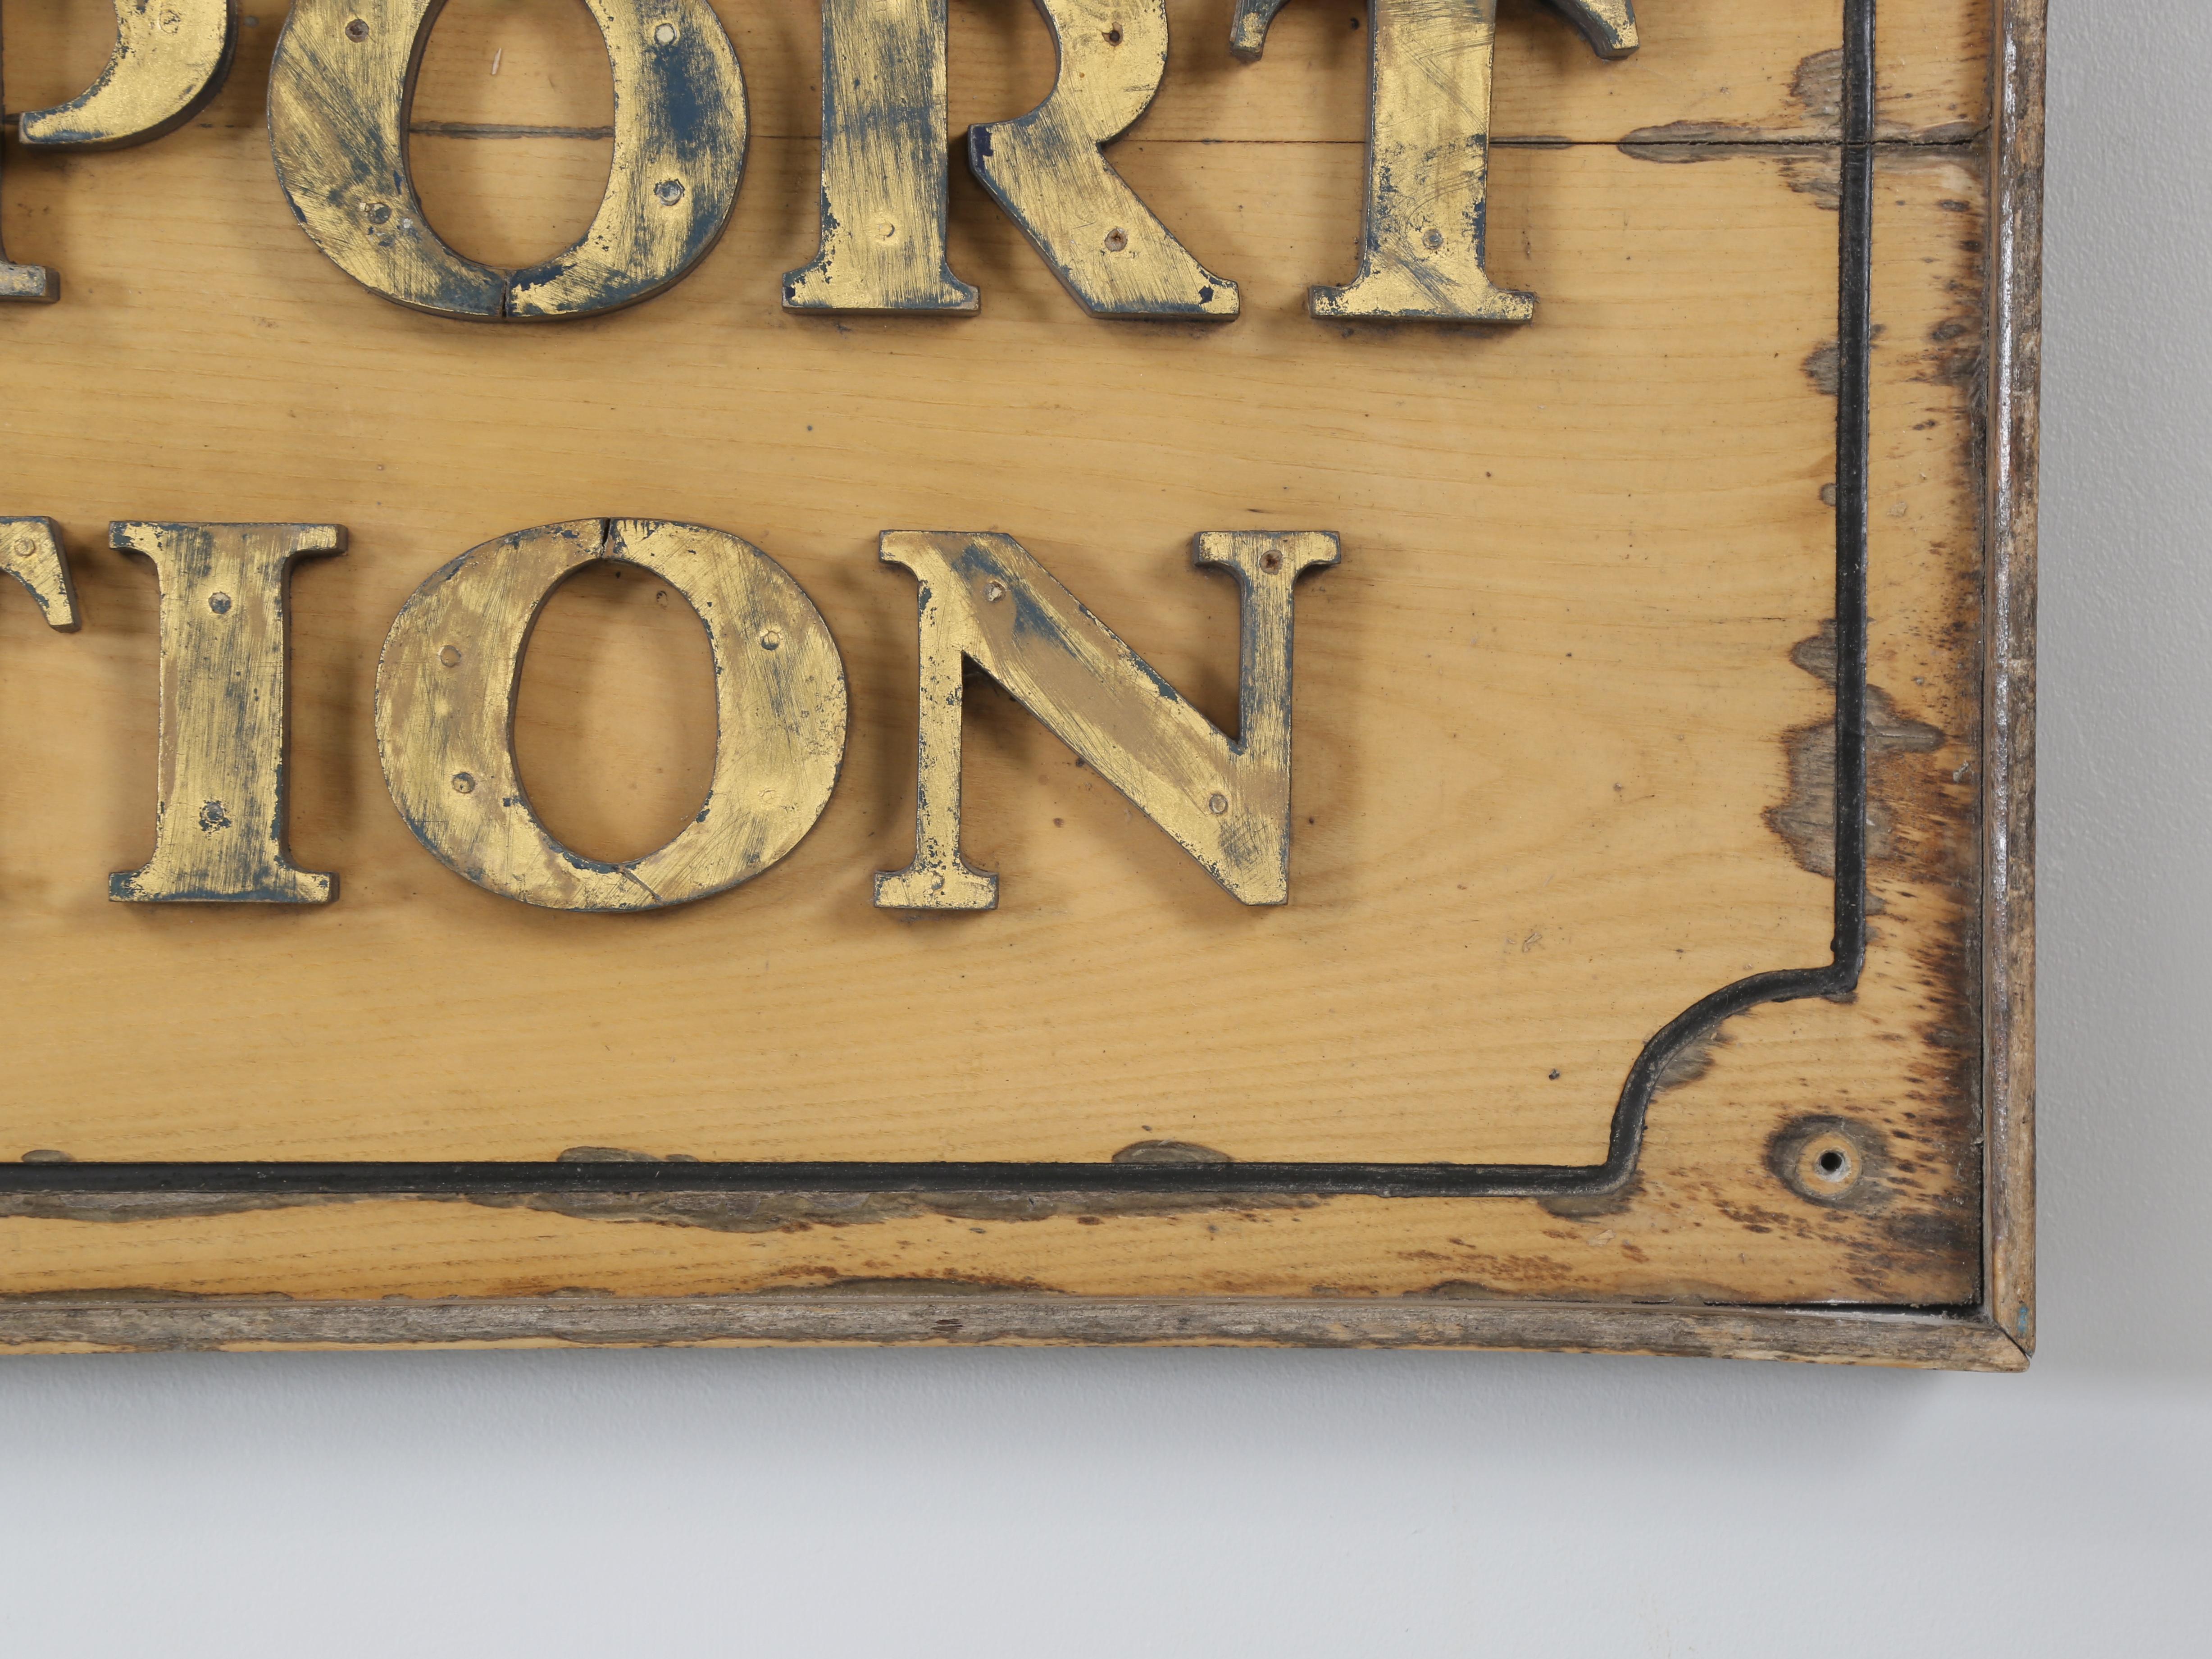 Country Visitors Please Report To Reception, Antique Sign Original Unrestored Condition